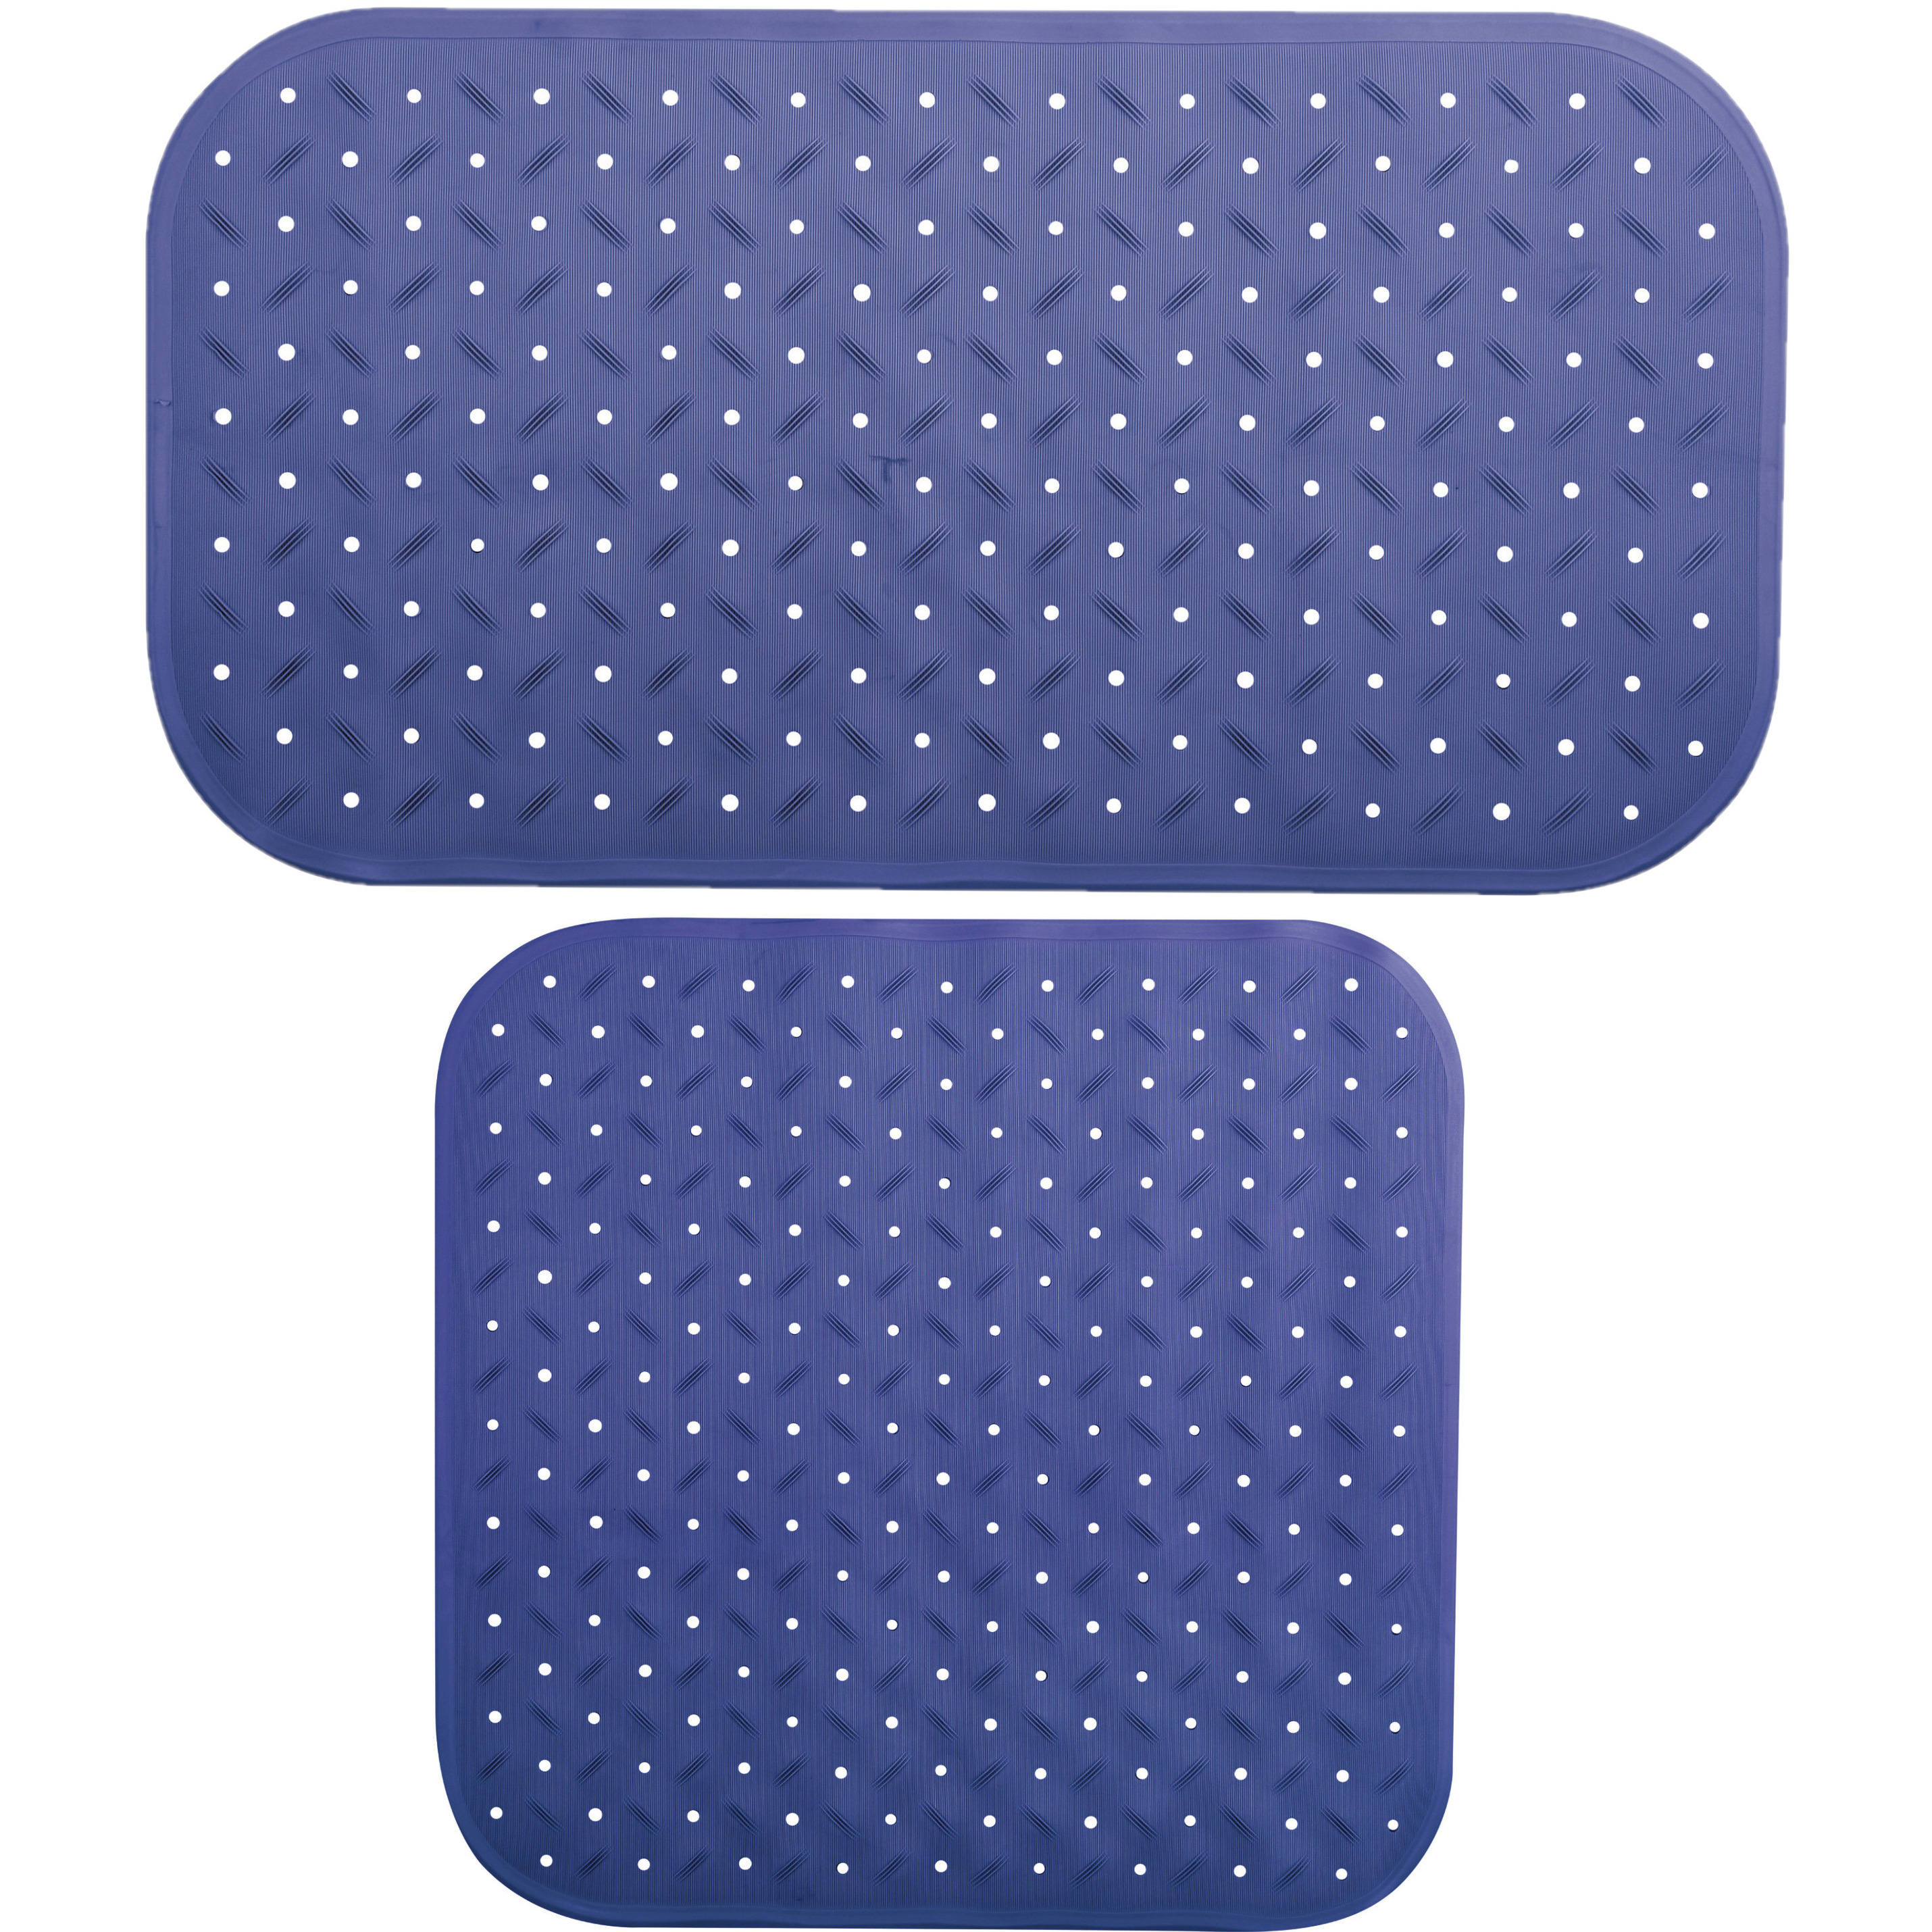 MSV Douche-bad anti-slip matten set badkamer rubber 2x stuks donkerblauw 2 formaten